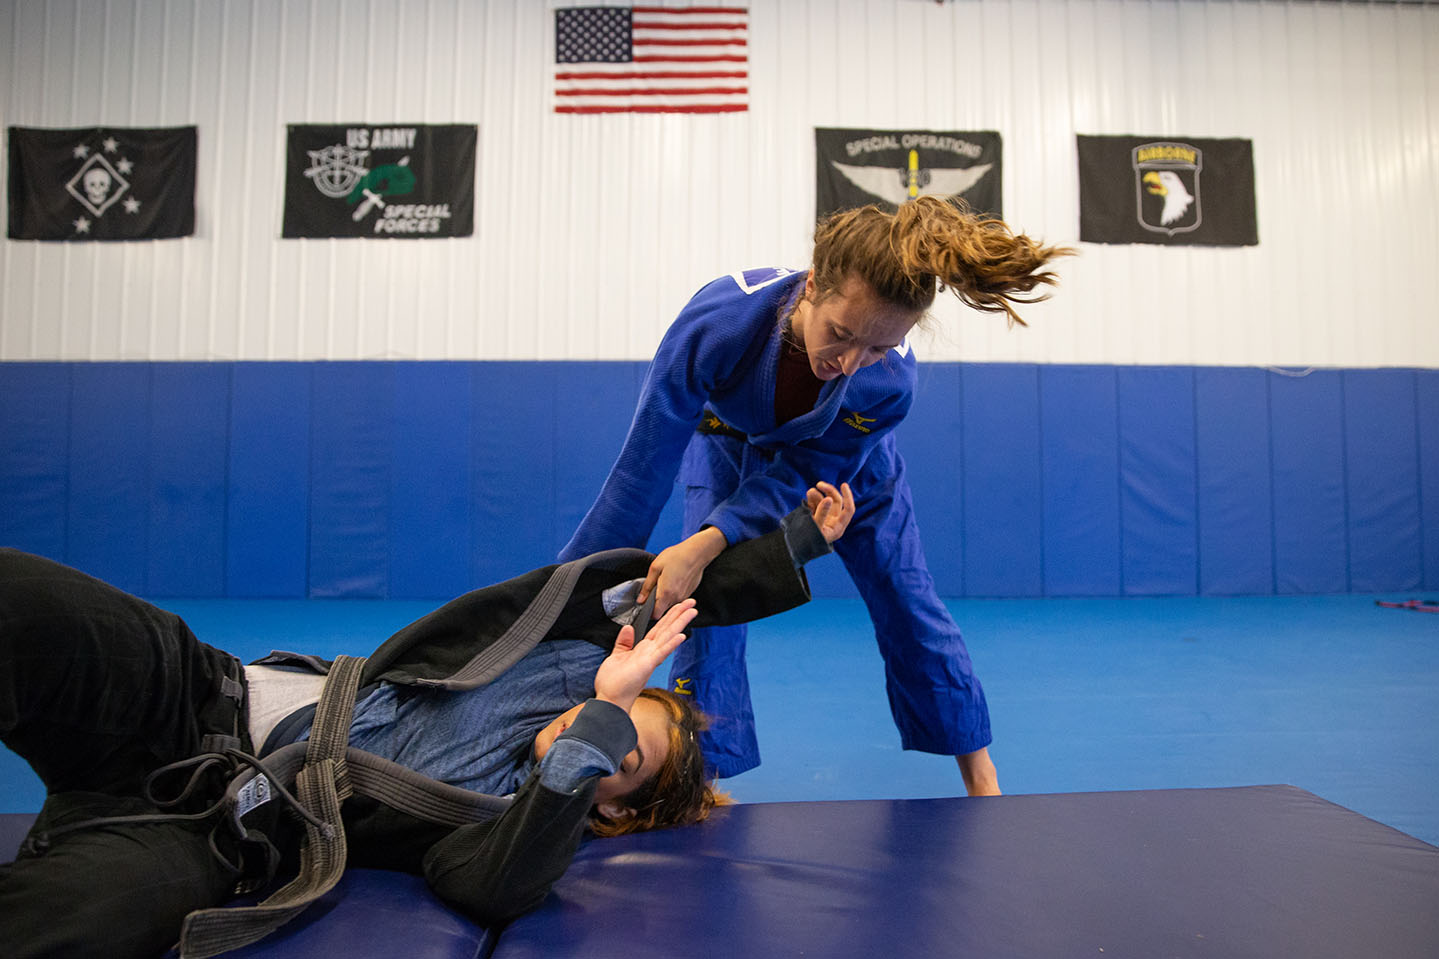 Brinna Lavelle shows off Judo skills